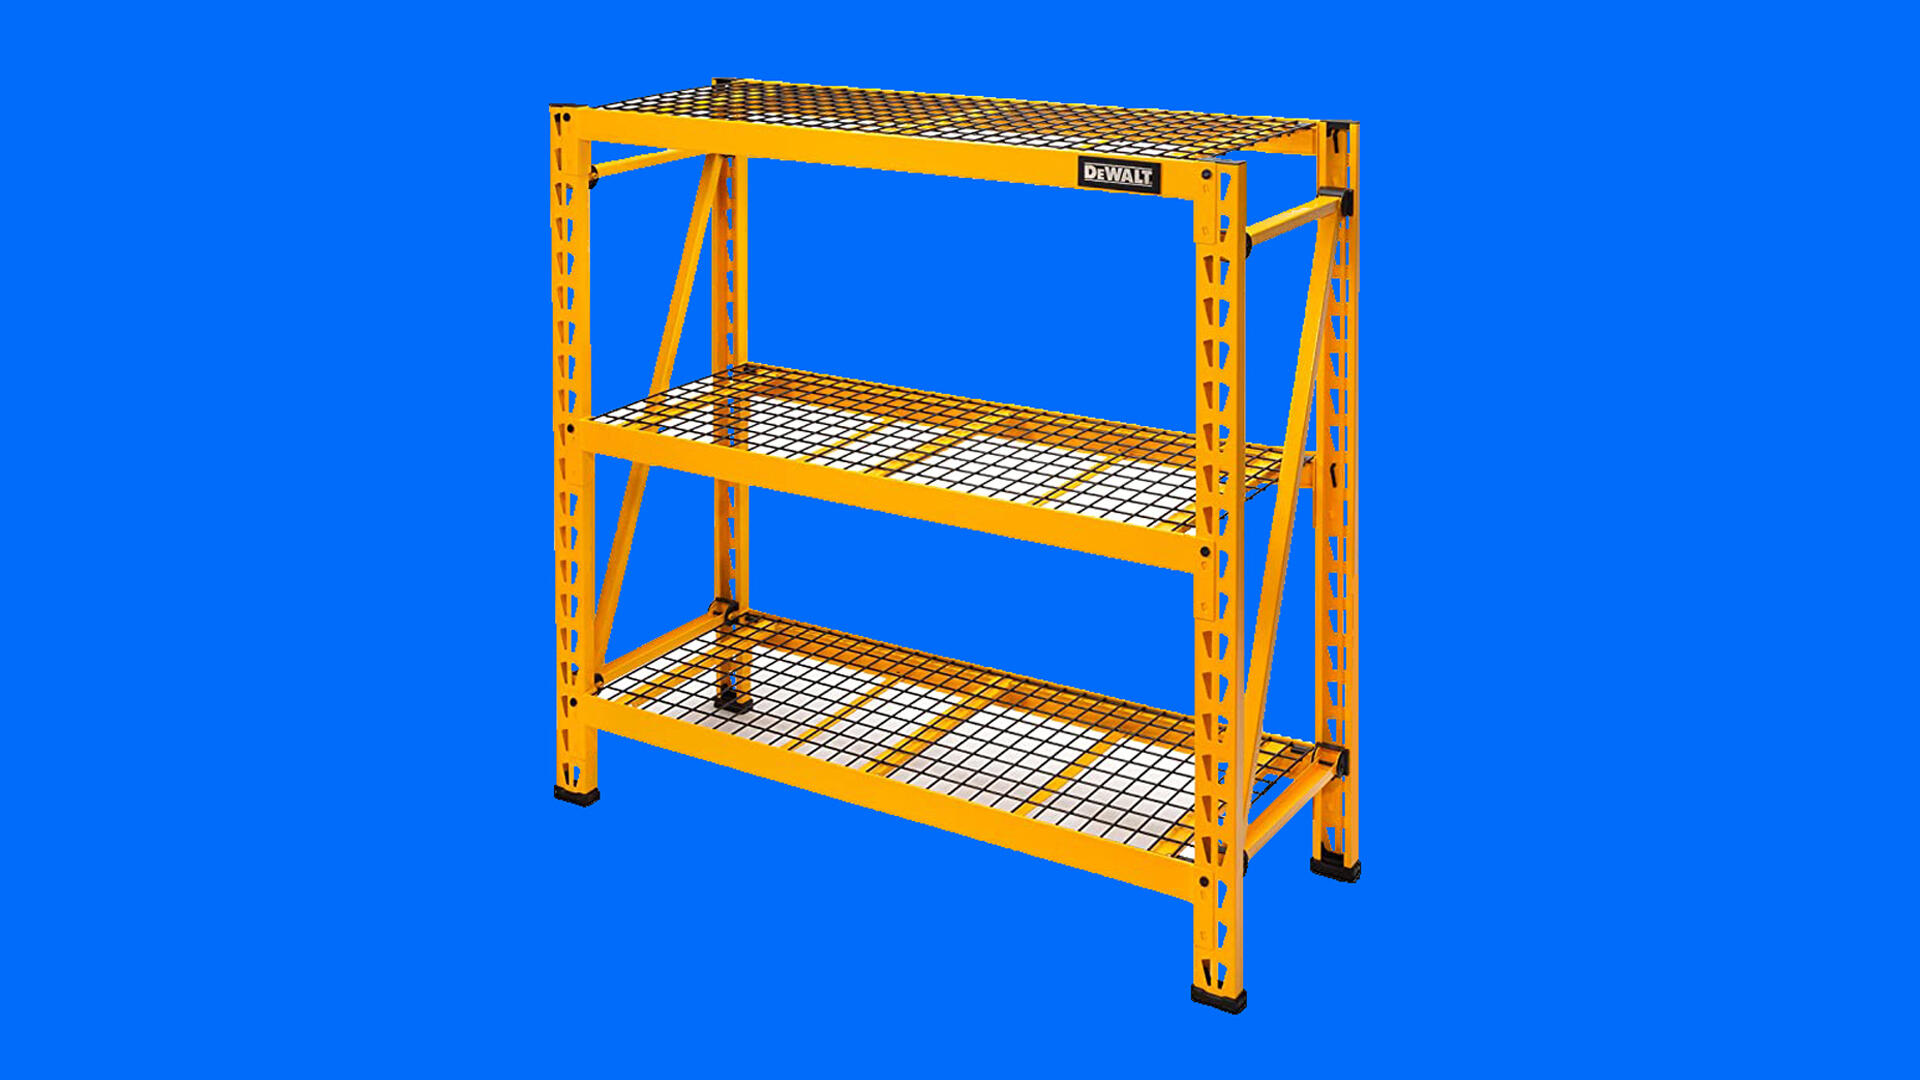 Best Garage Shelving: Using Ikea Bror Shelving for Garage Organization -  VIV & TIM